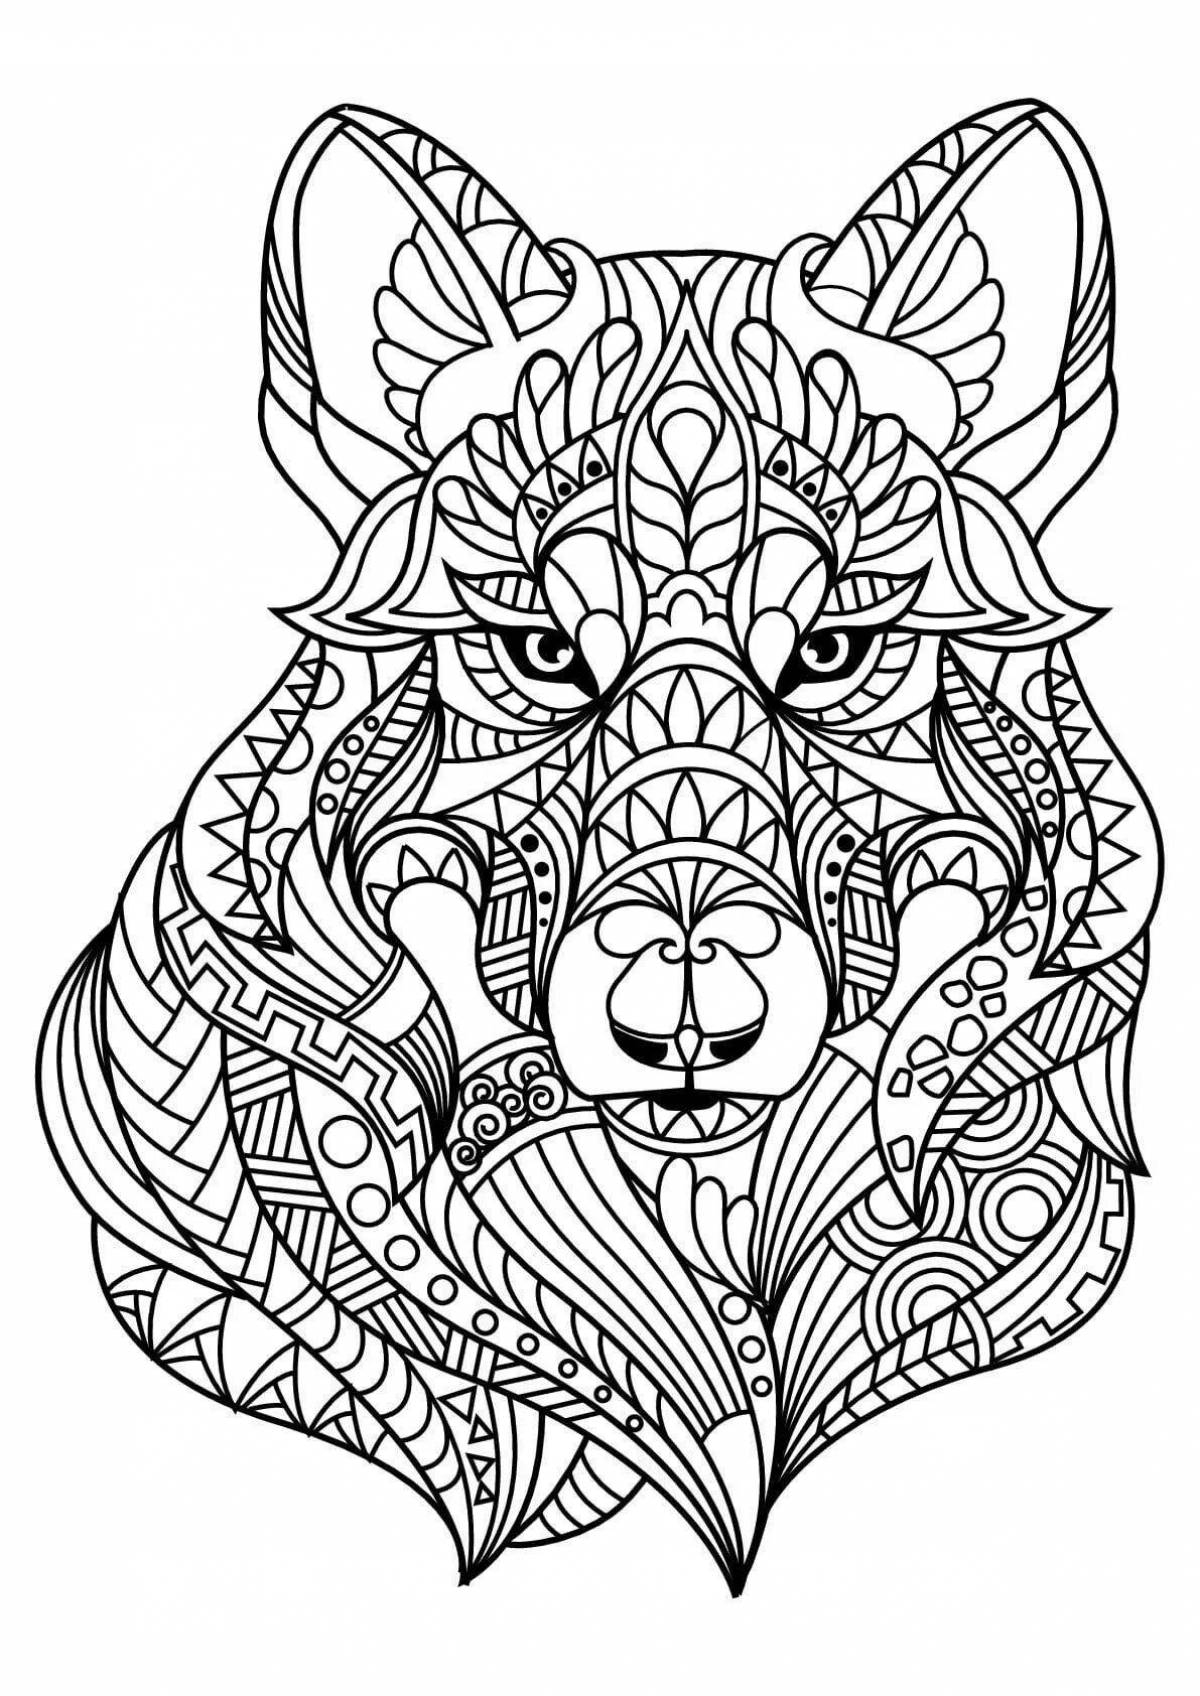 Artistic animal mandala coloring page